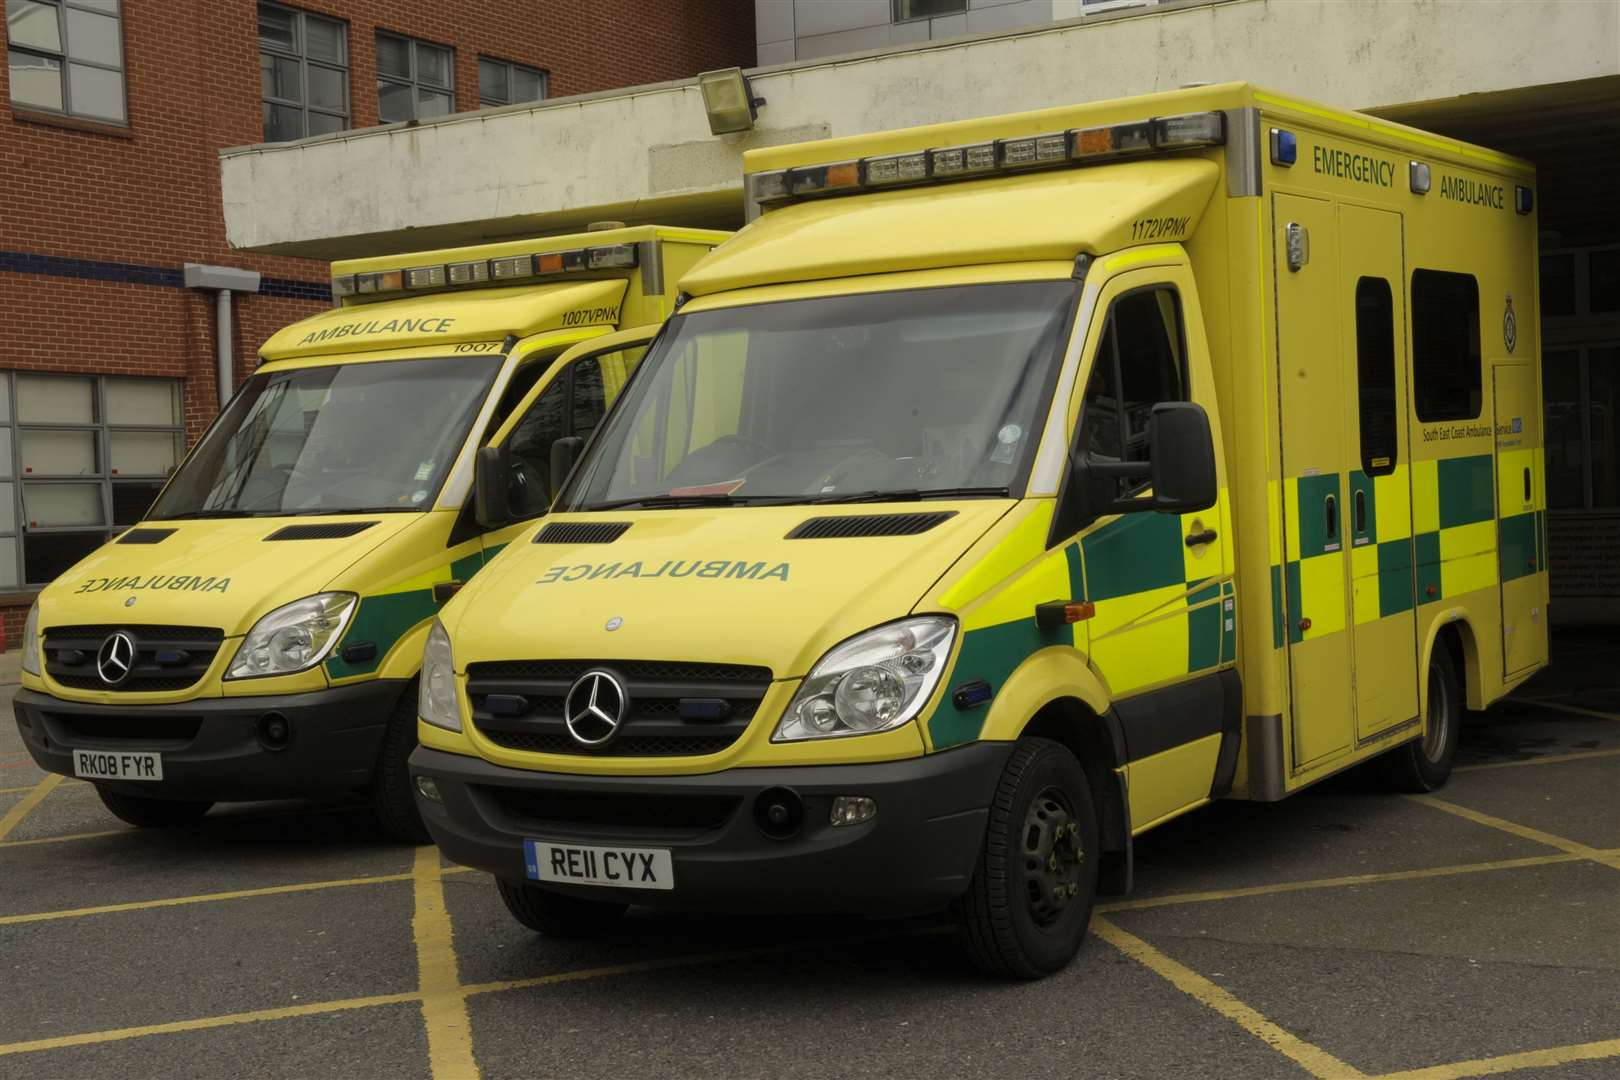 Extra ambulances have been sent to Kent Picture: Steve Crispe